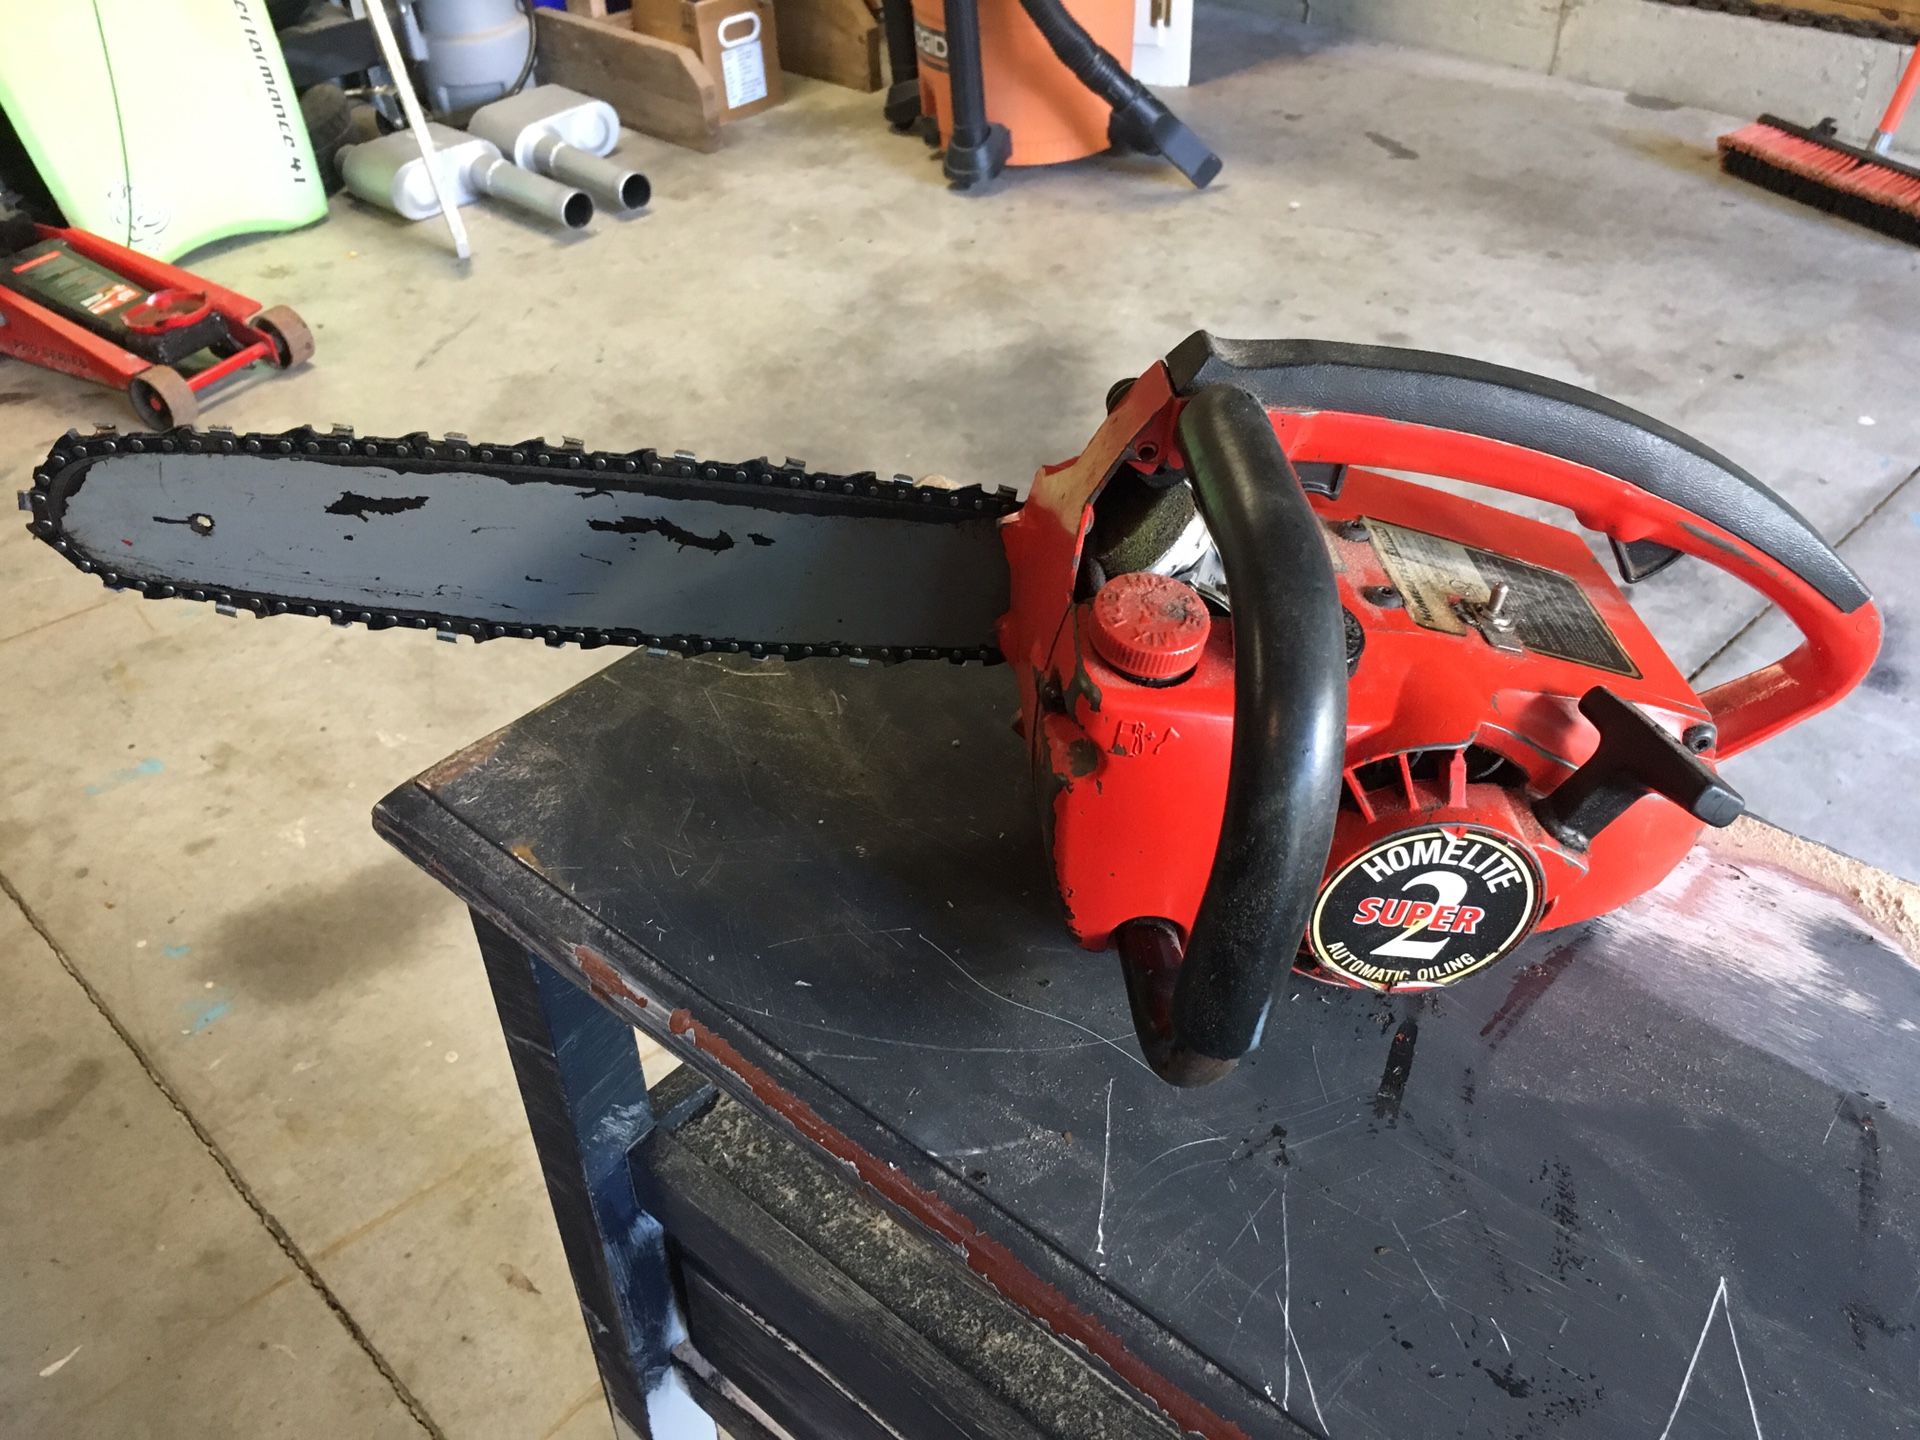 Homelite 16 inch chainsaw